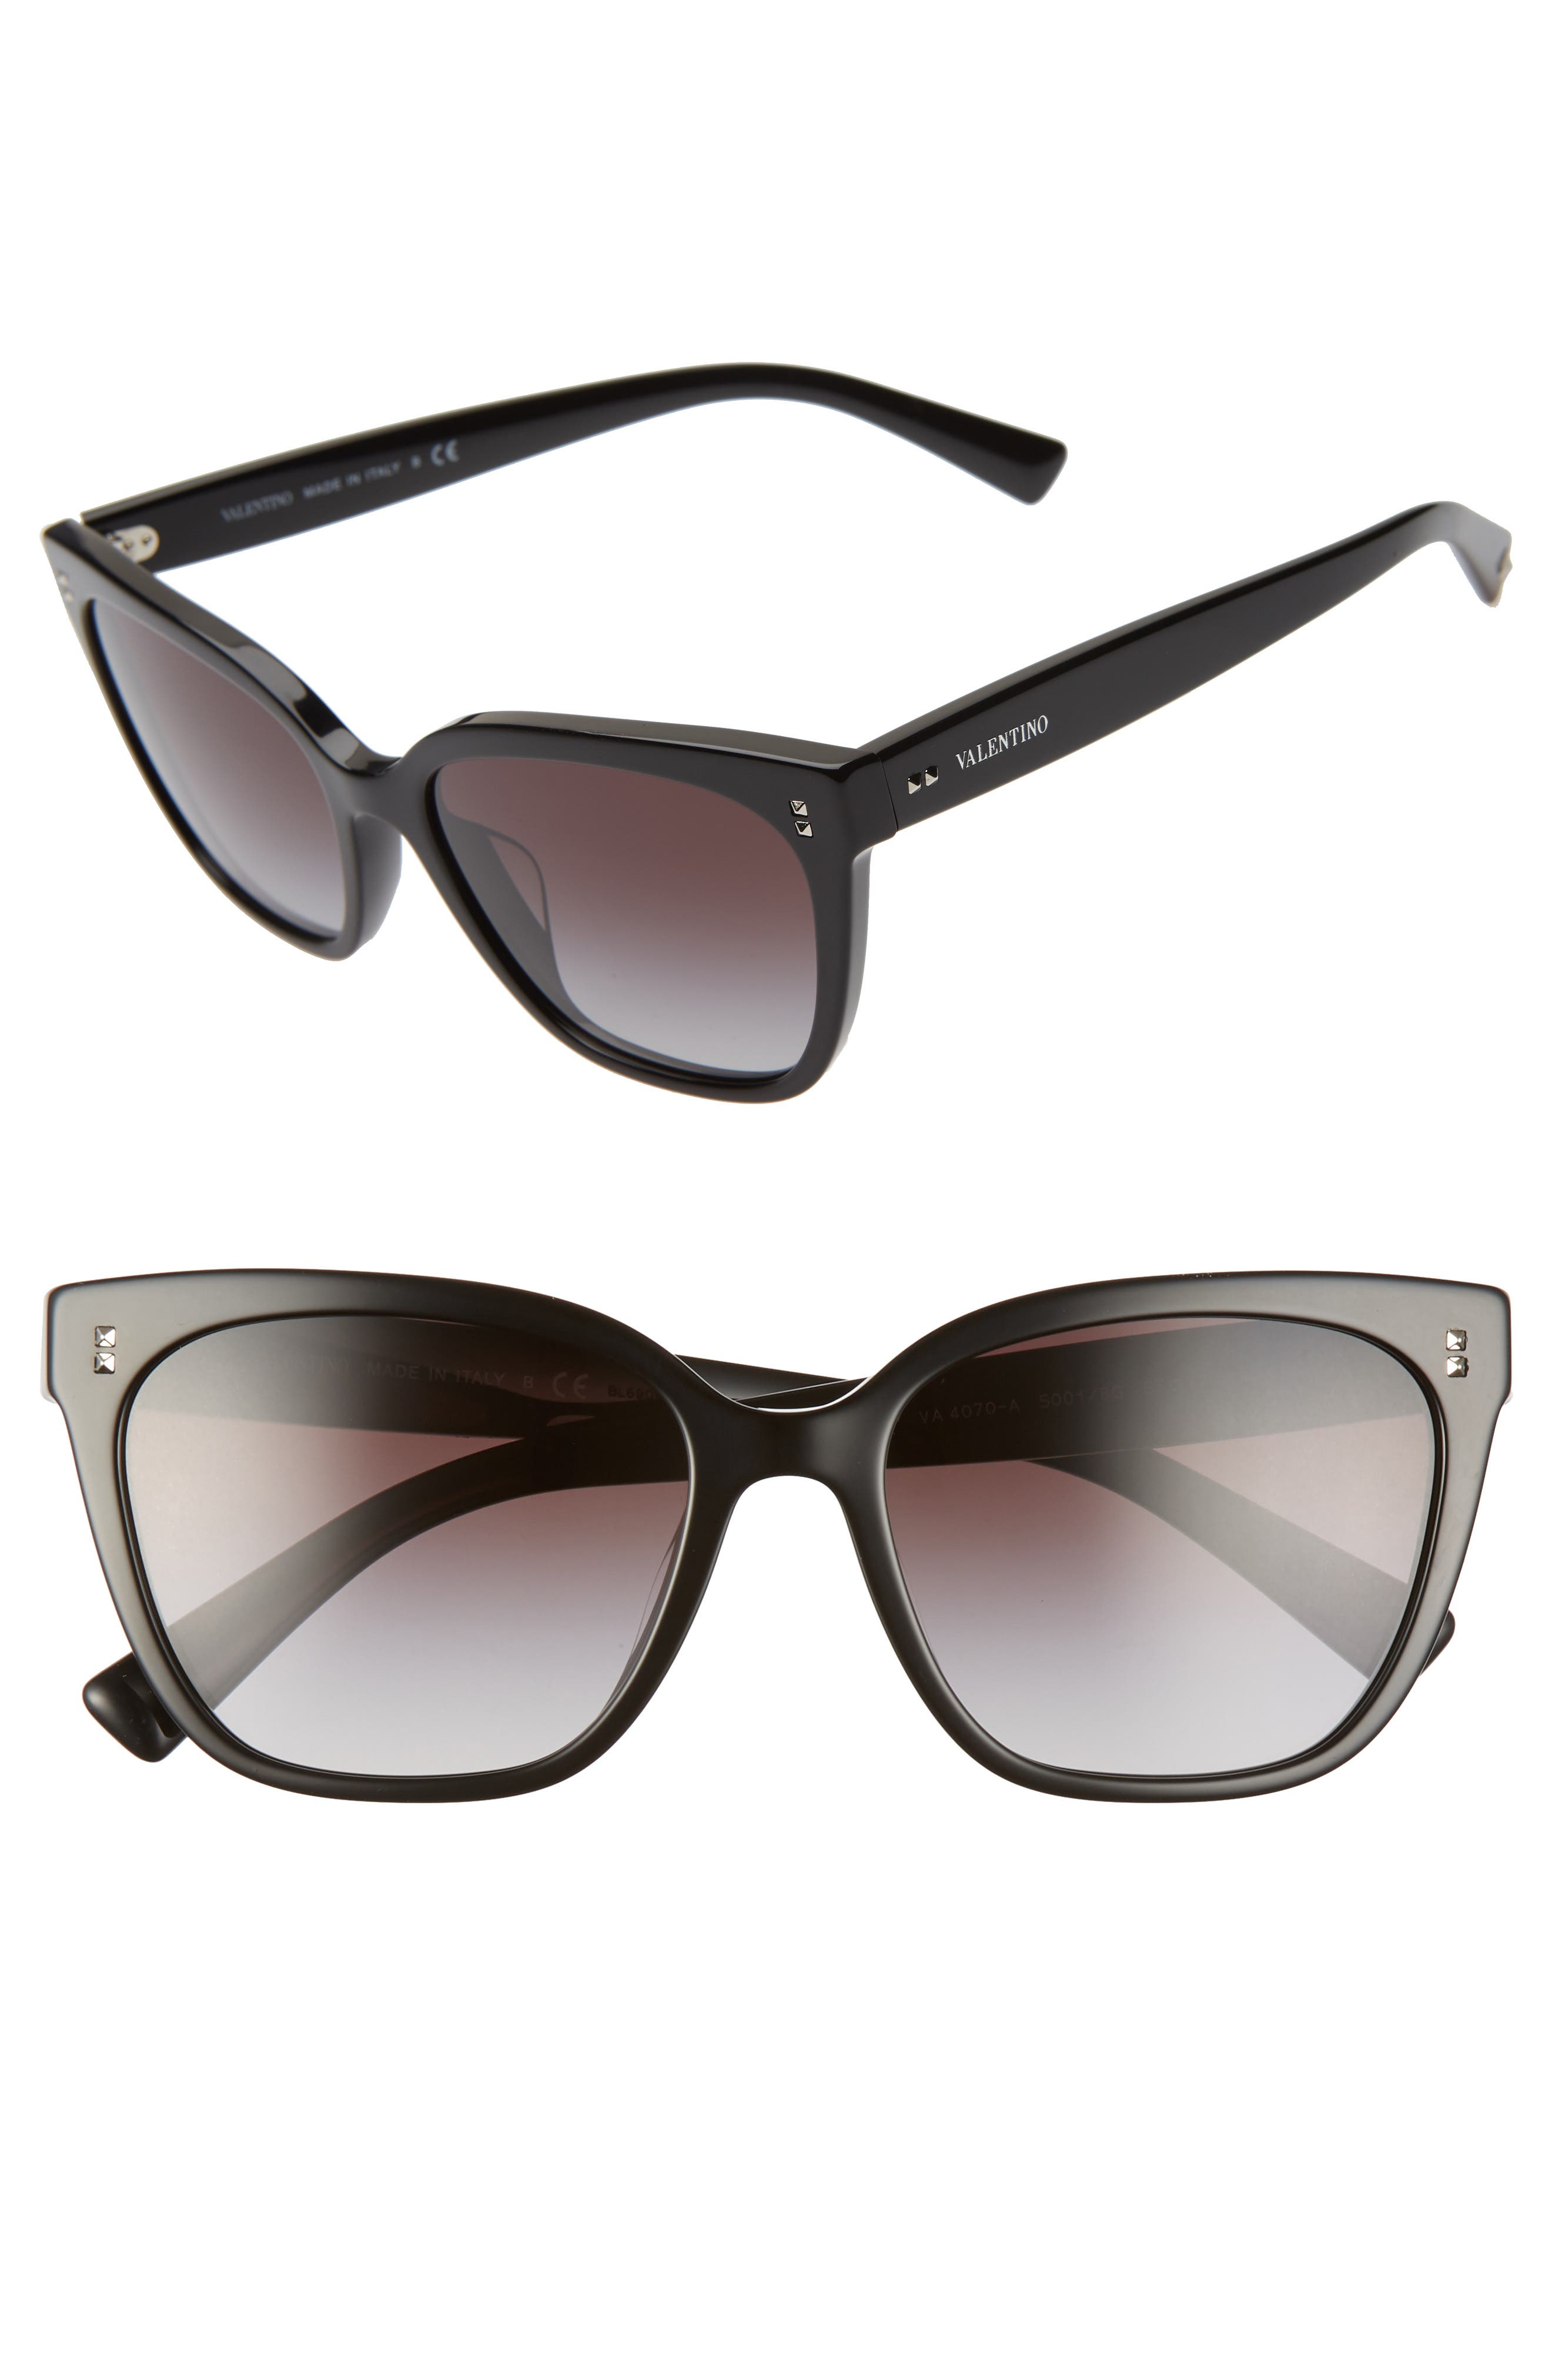 Valentino 55mm Gradient Square Cat Eye Sunglasses in Black/Black Gradient at Nordstrom